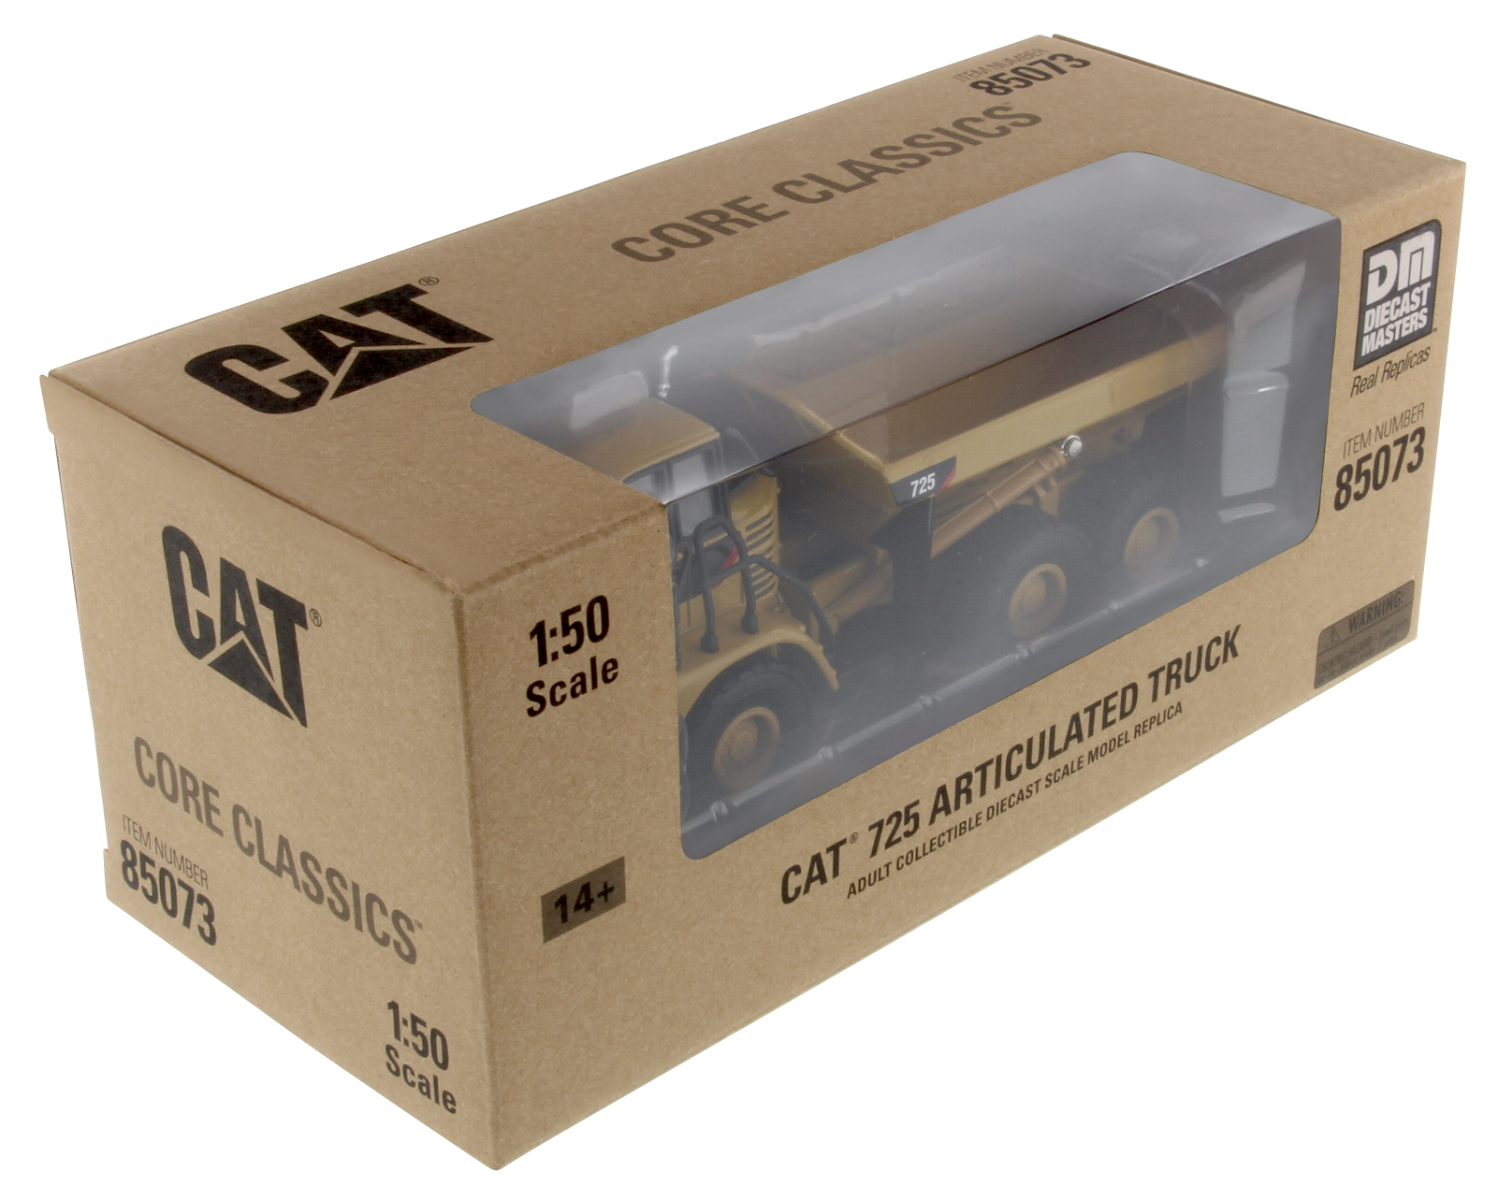 CAT Die Cast 725 Articulated Truck Core Classic Edition 1:50